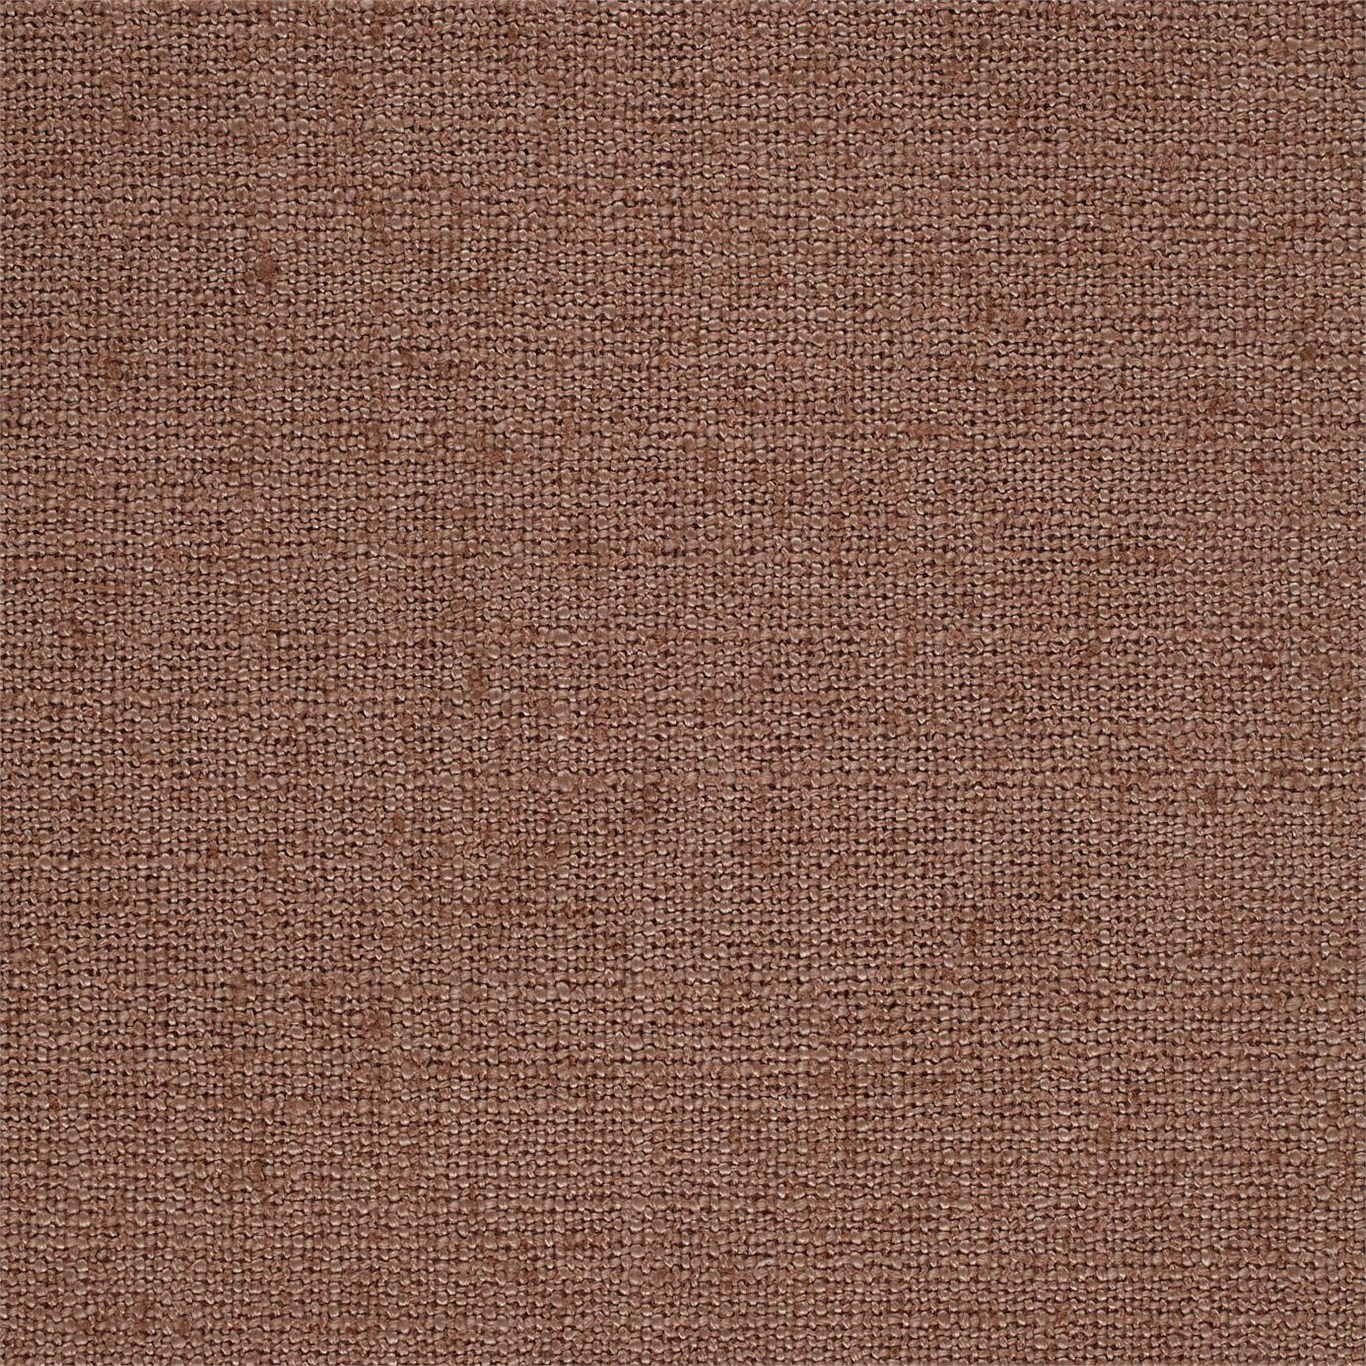 Lagom Spice Fabric by SAN